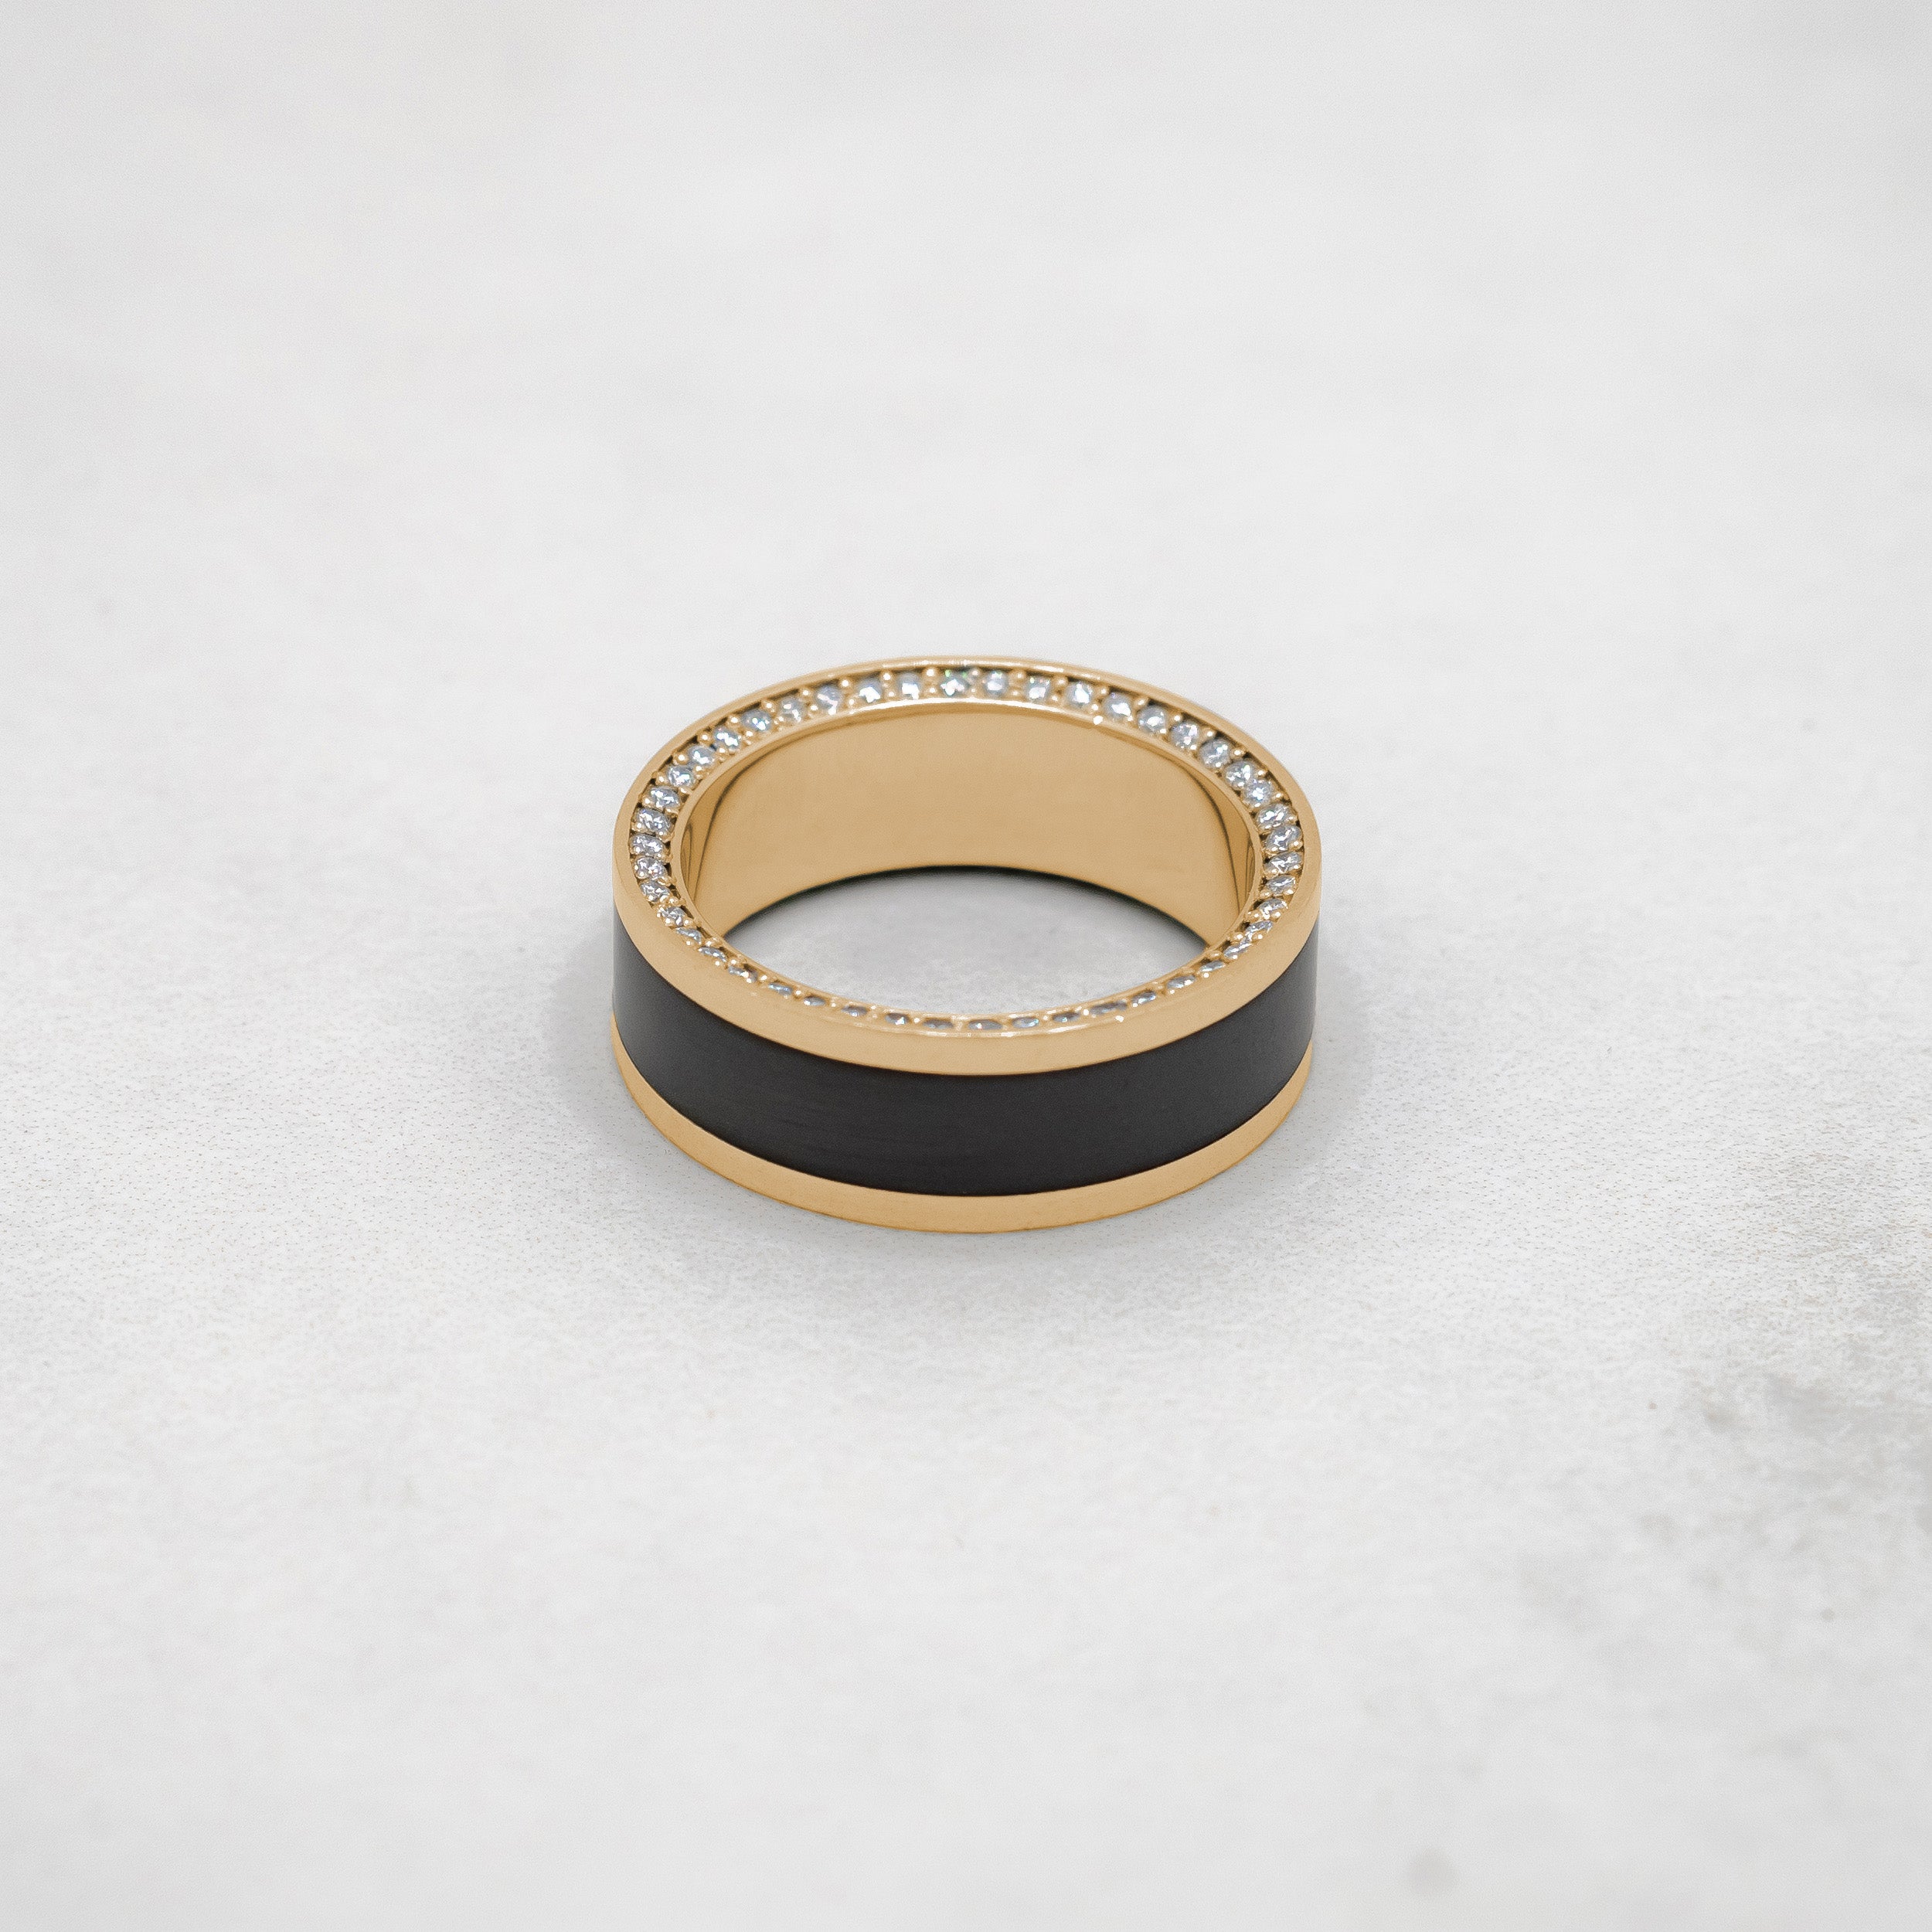 Black Diamond - Men’s Ring 8mm - Yellow Gold Band w Black Diamond inlay and Diamond Insets - ZEUS - Elysium Black Diamond